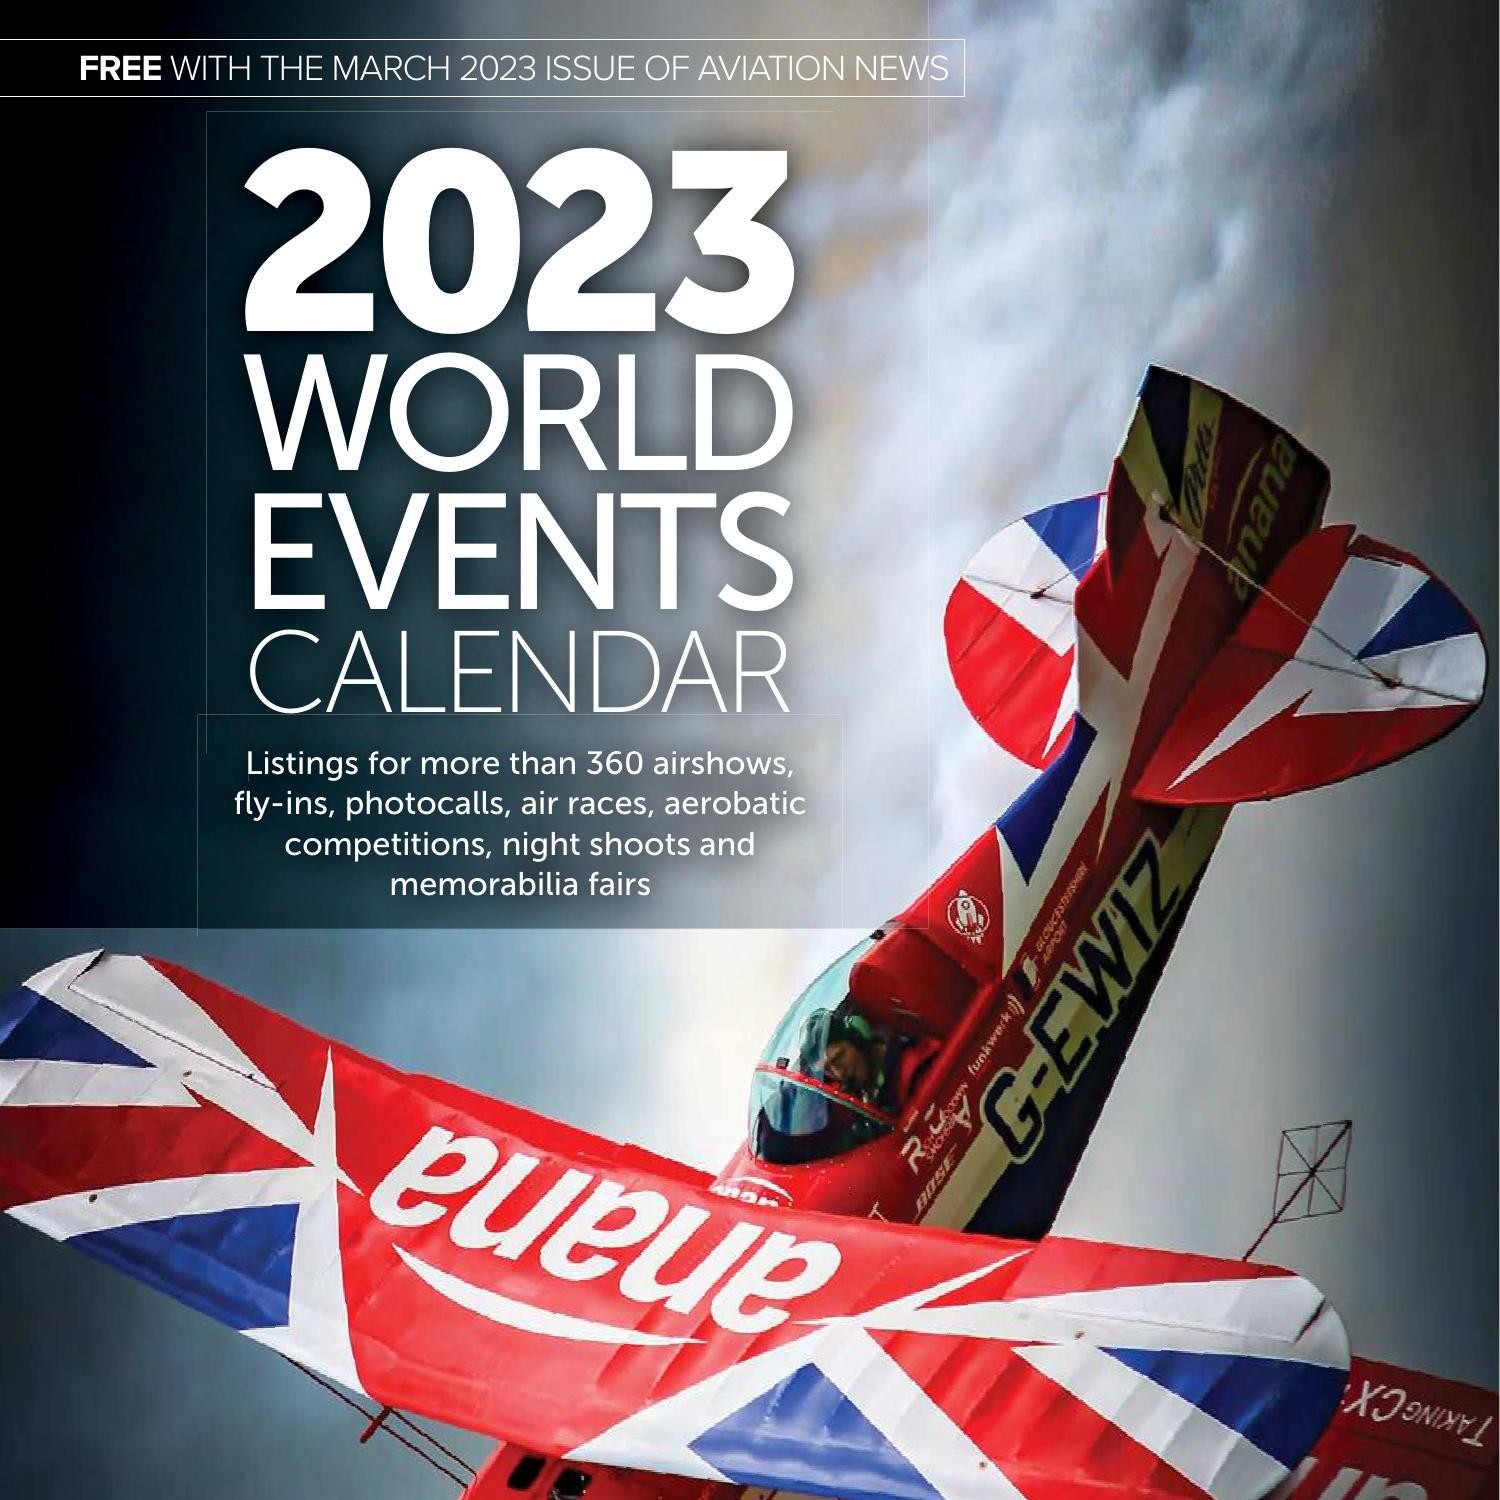 2023 WORLD EVENTS CALENDAR, Aviation News 202303.pdf DocDroid